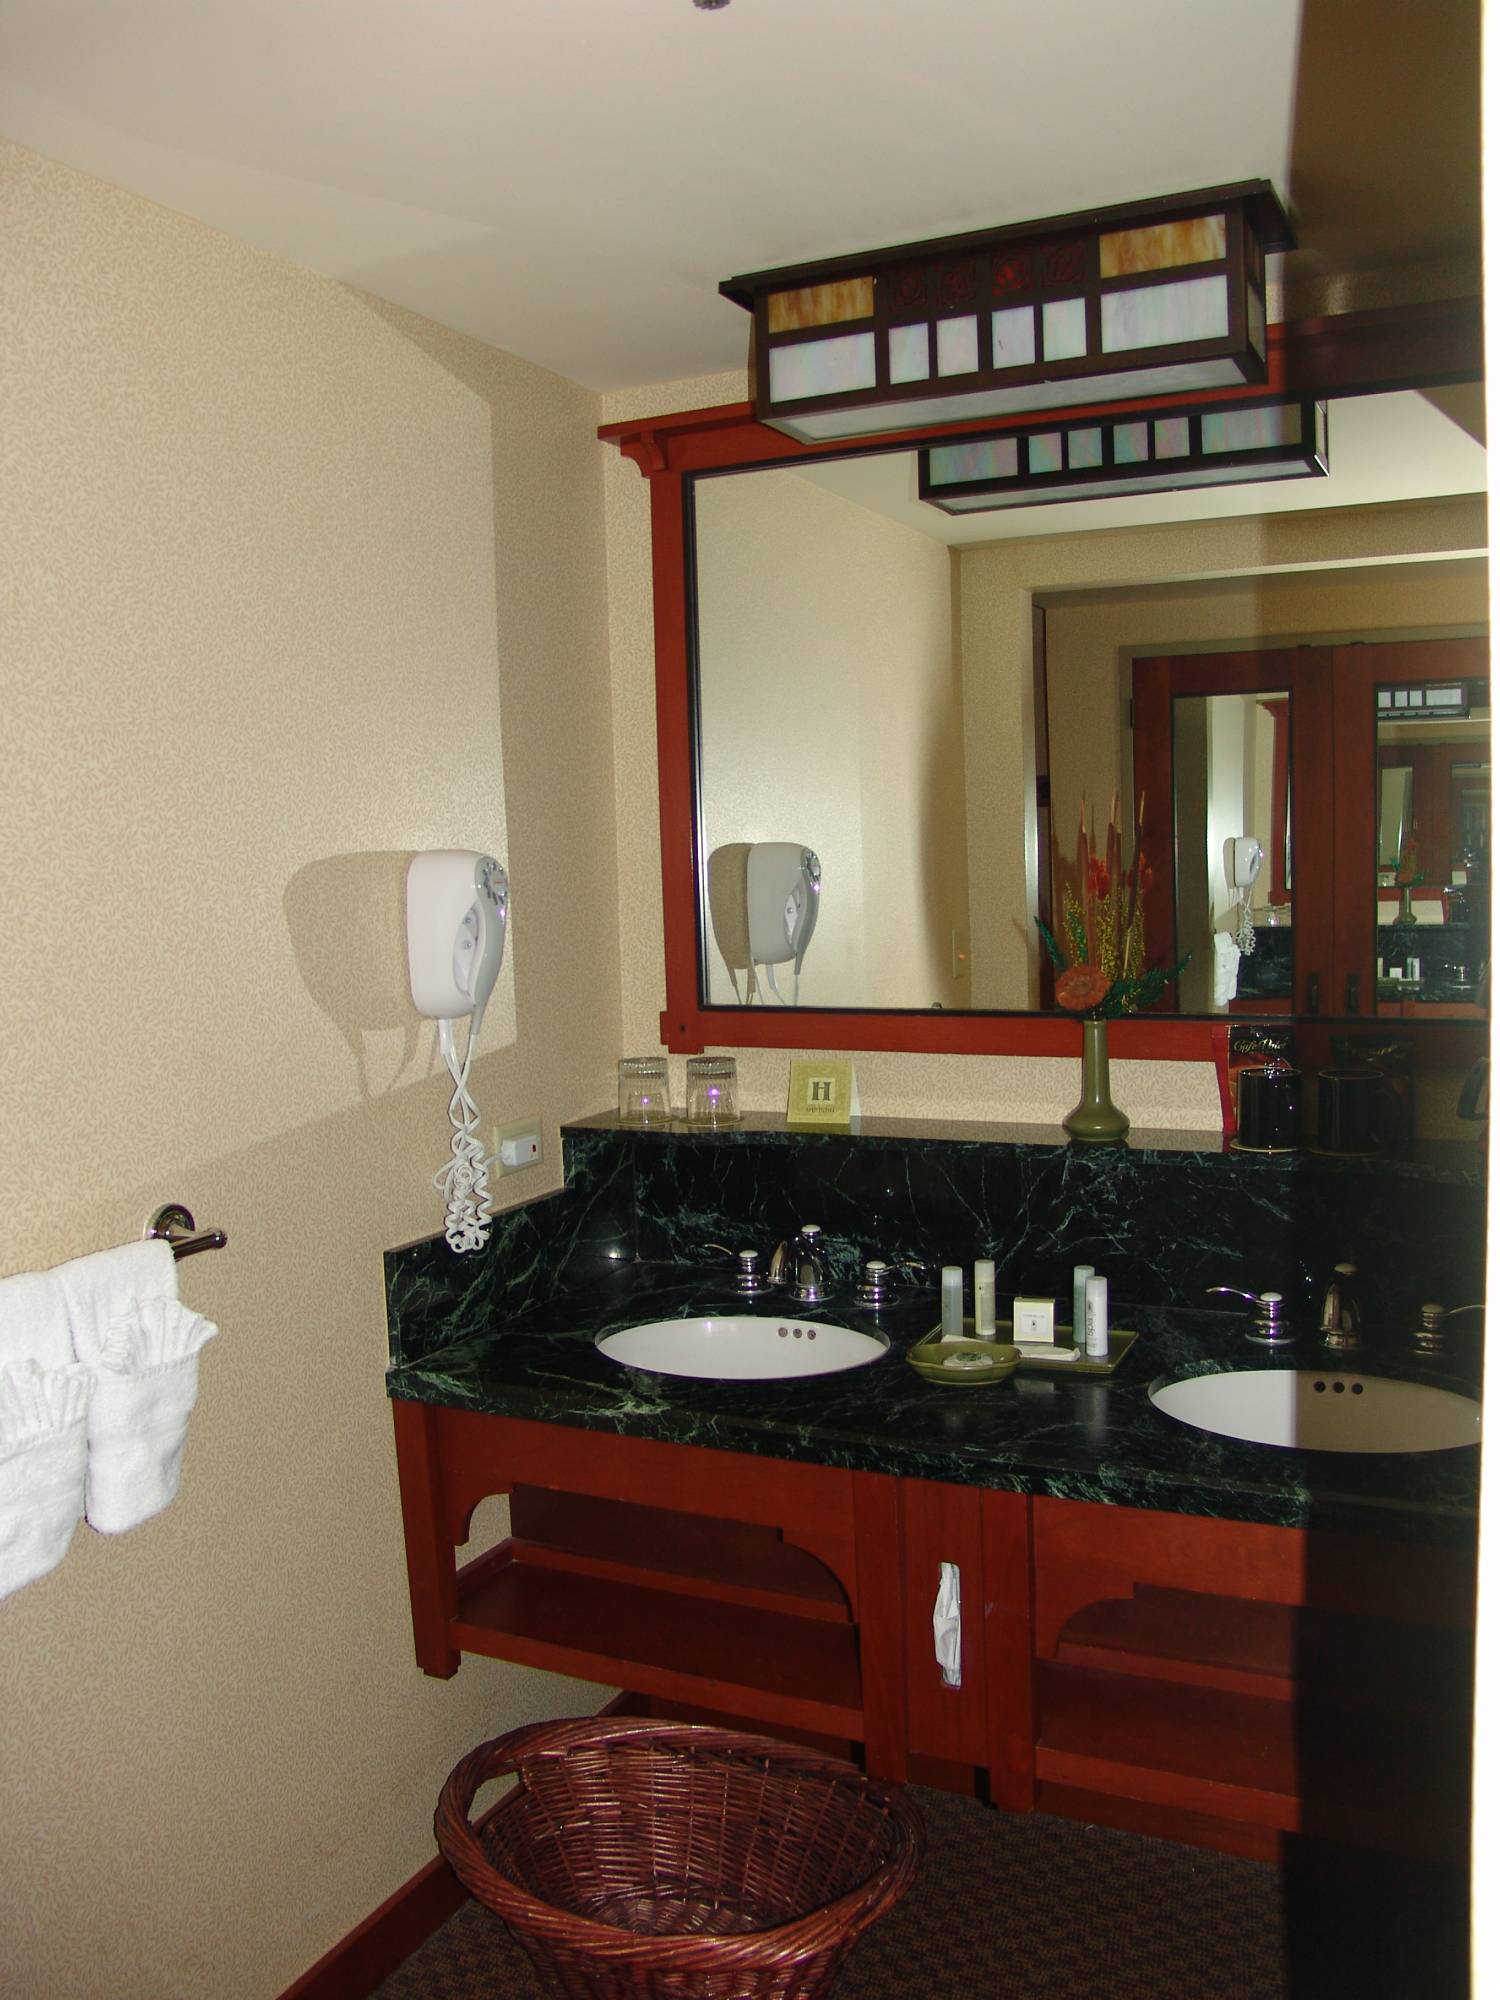 Grand Californian Hotel - bathroom area